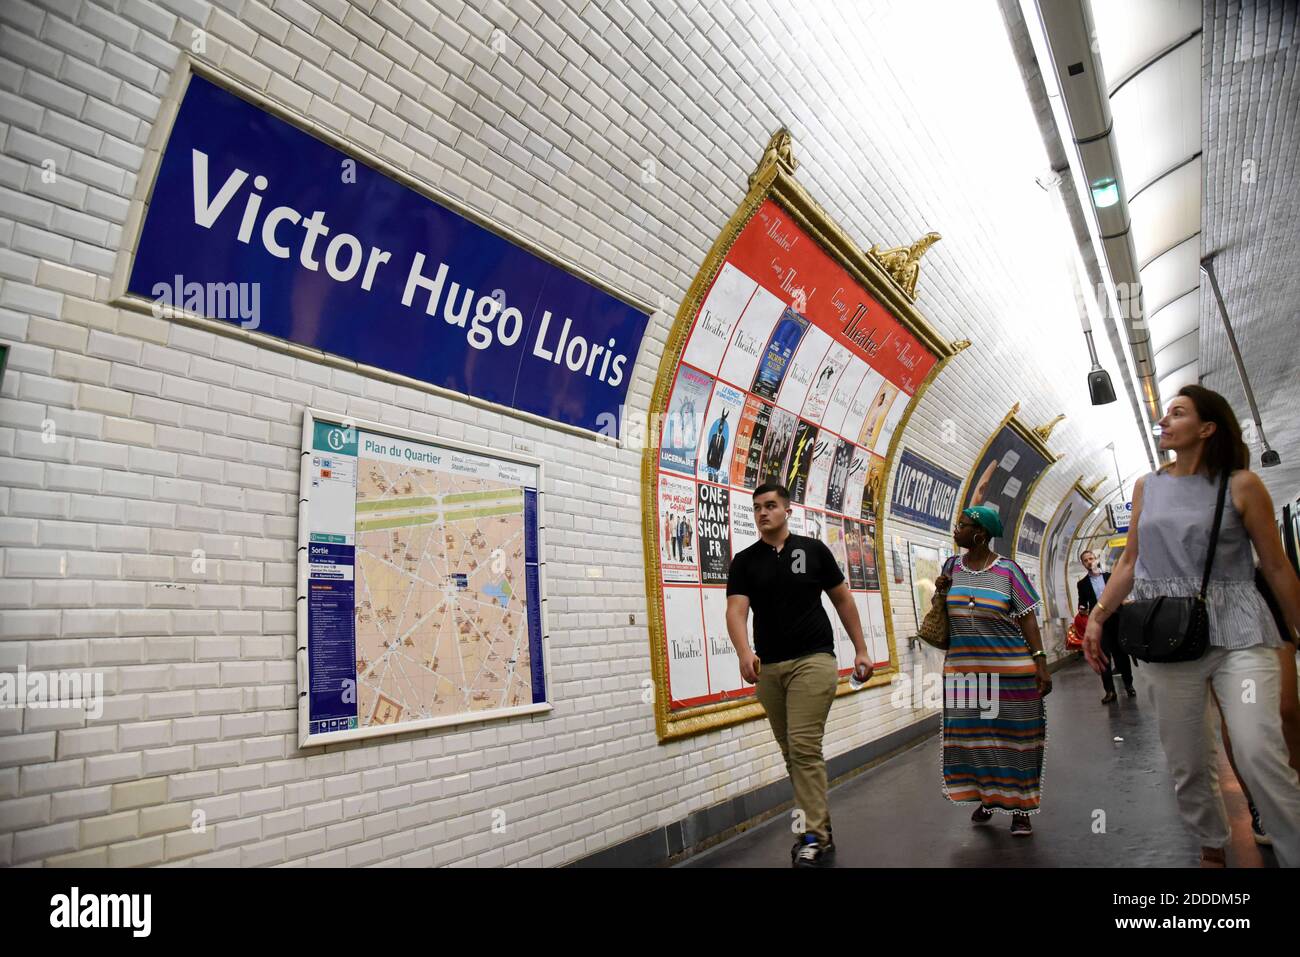 Victor Hugo (Paris MÃ©tro)